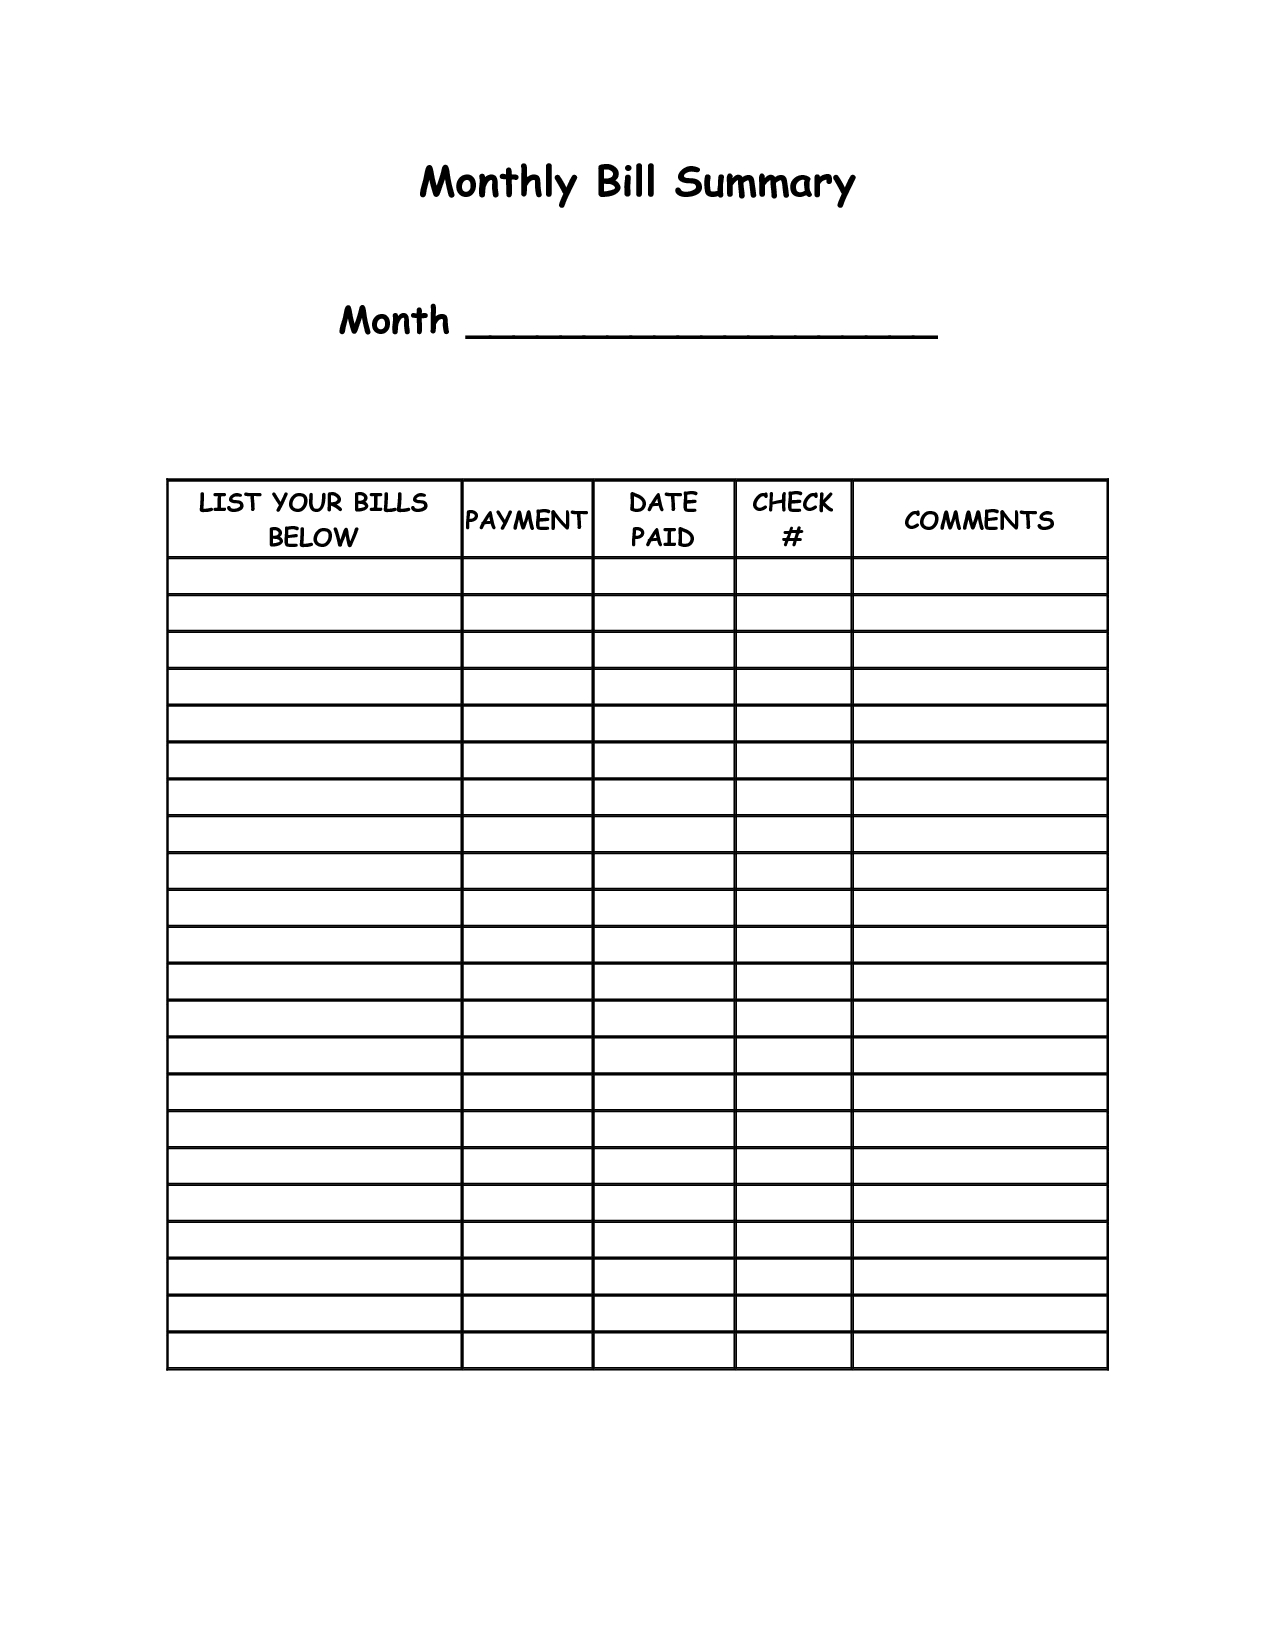 Monthly Bill Summary Doc | Organization | Bill Payment Organization pertaining to Microsoft Excel Bill Organizer Blank